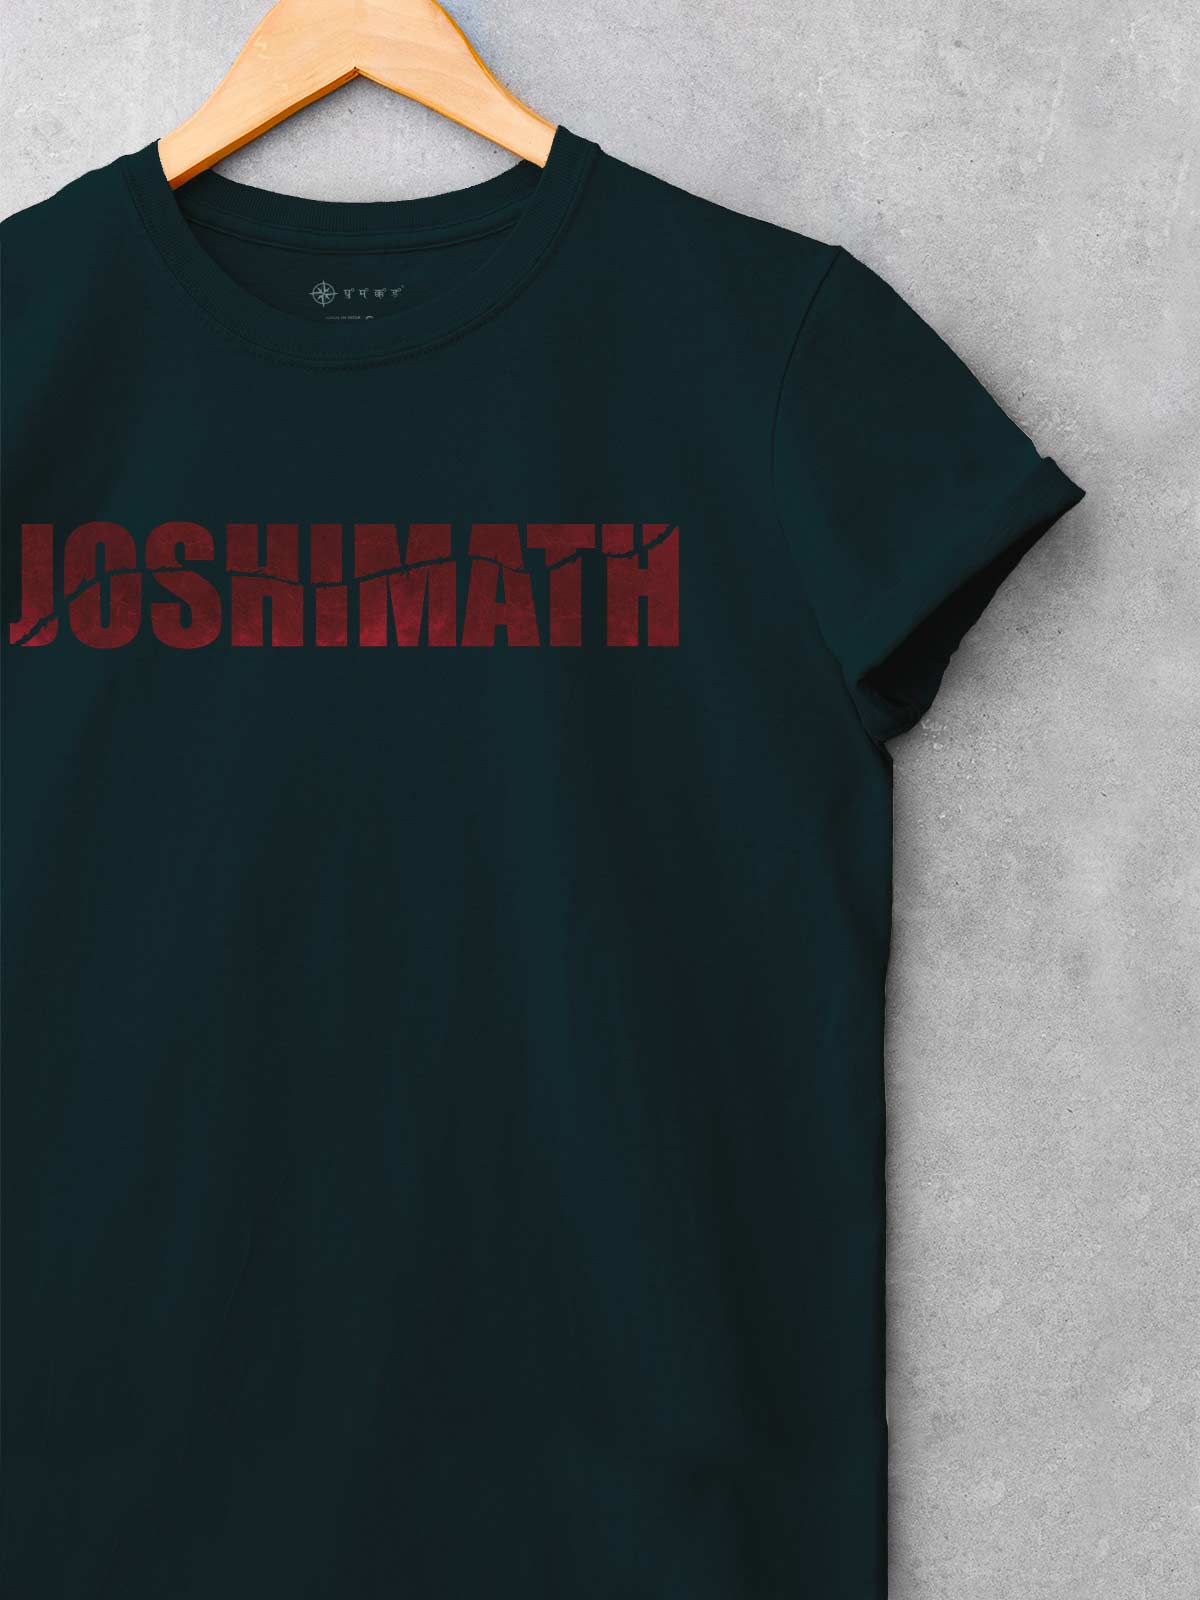 Joshimath-printed-t-shirt-for-men by Ghumakkad